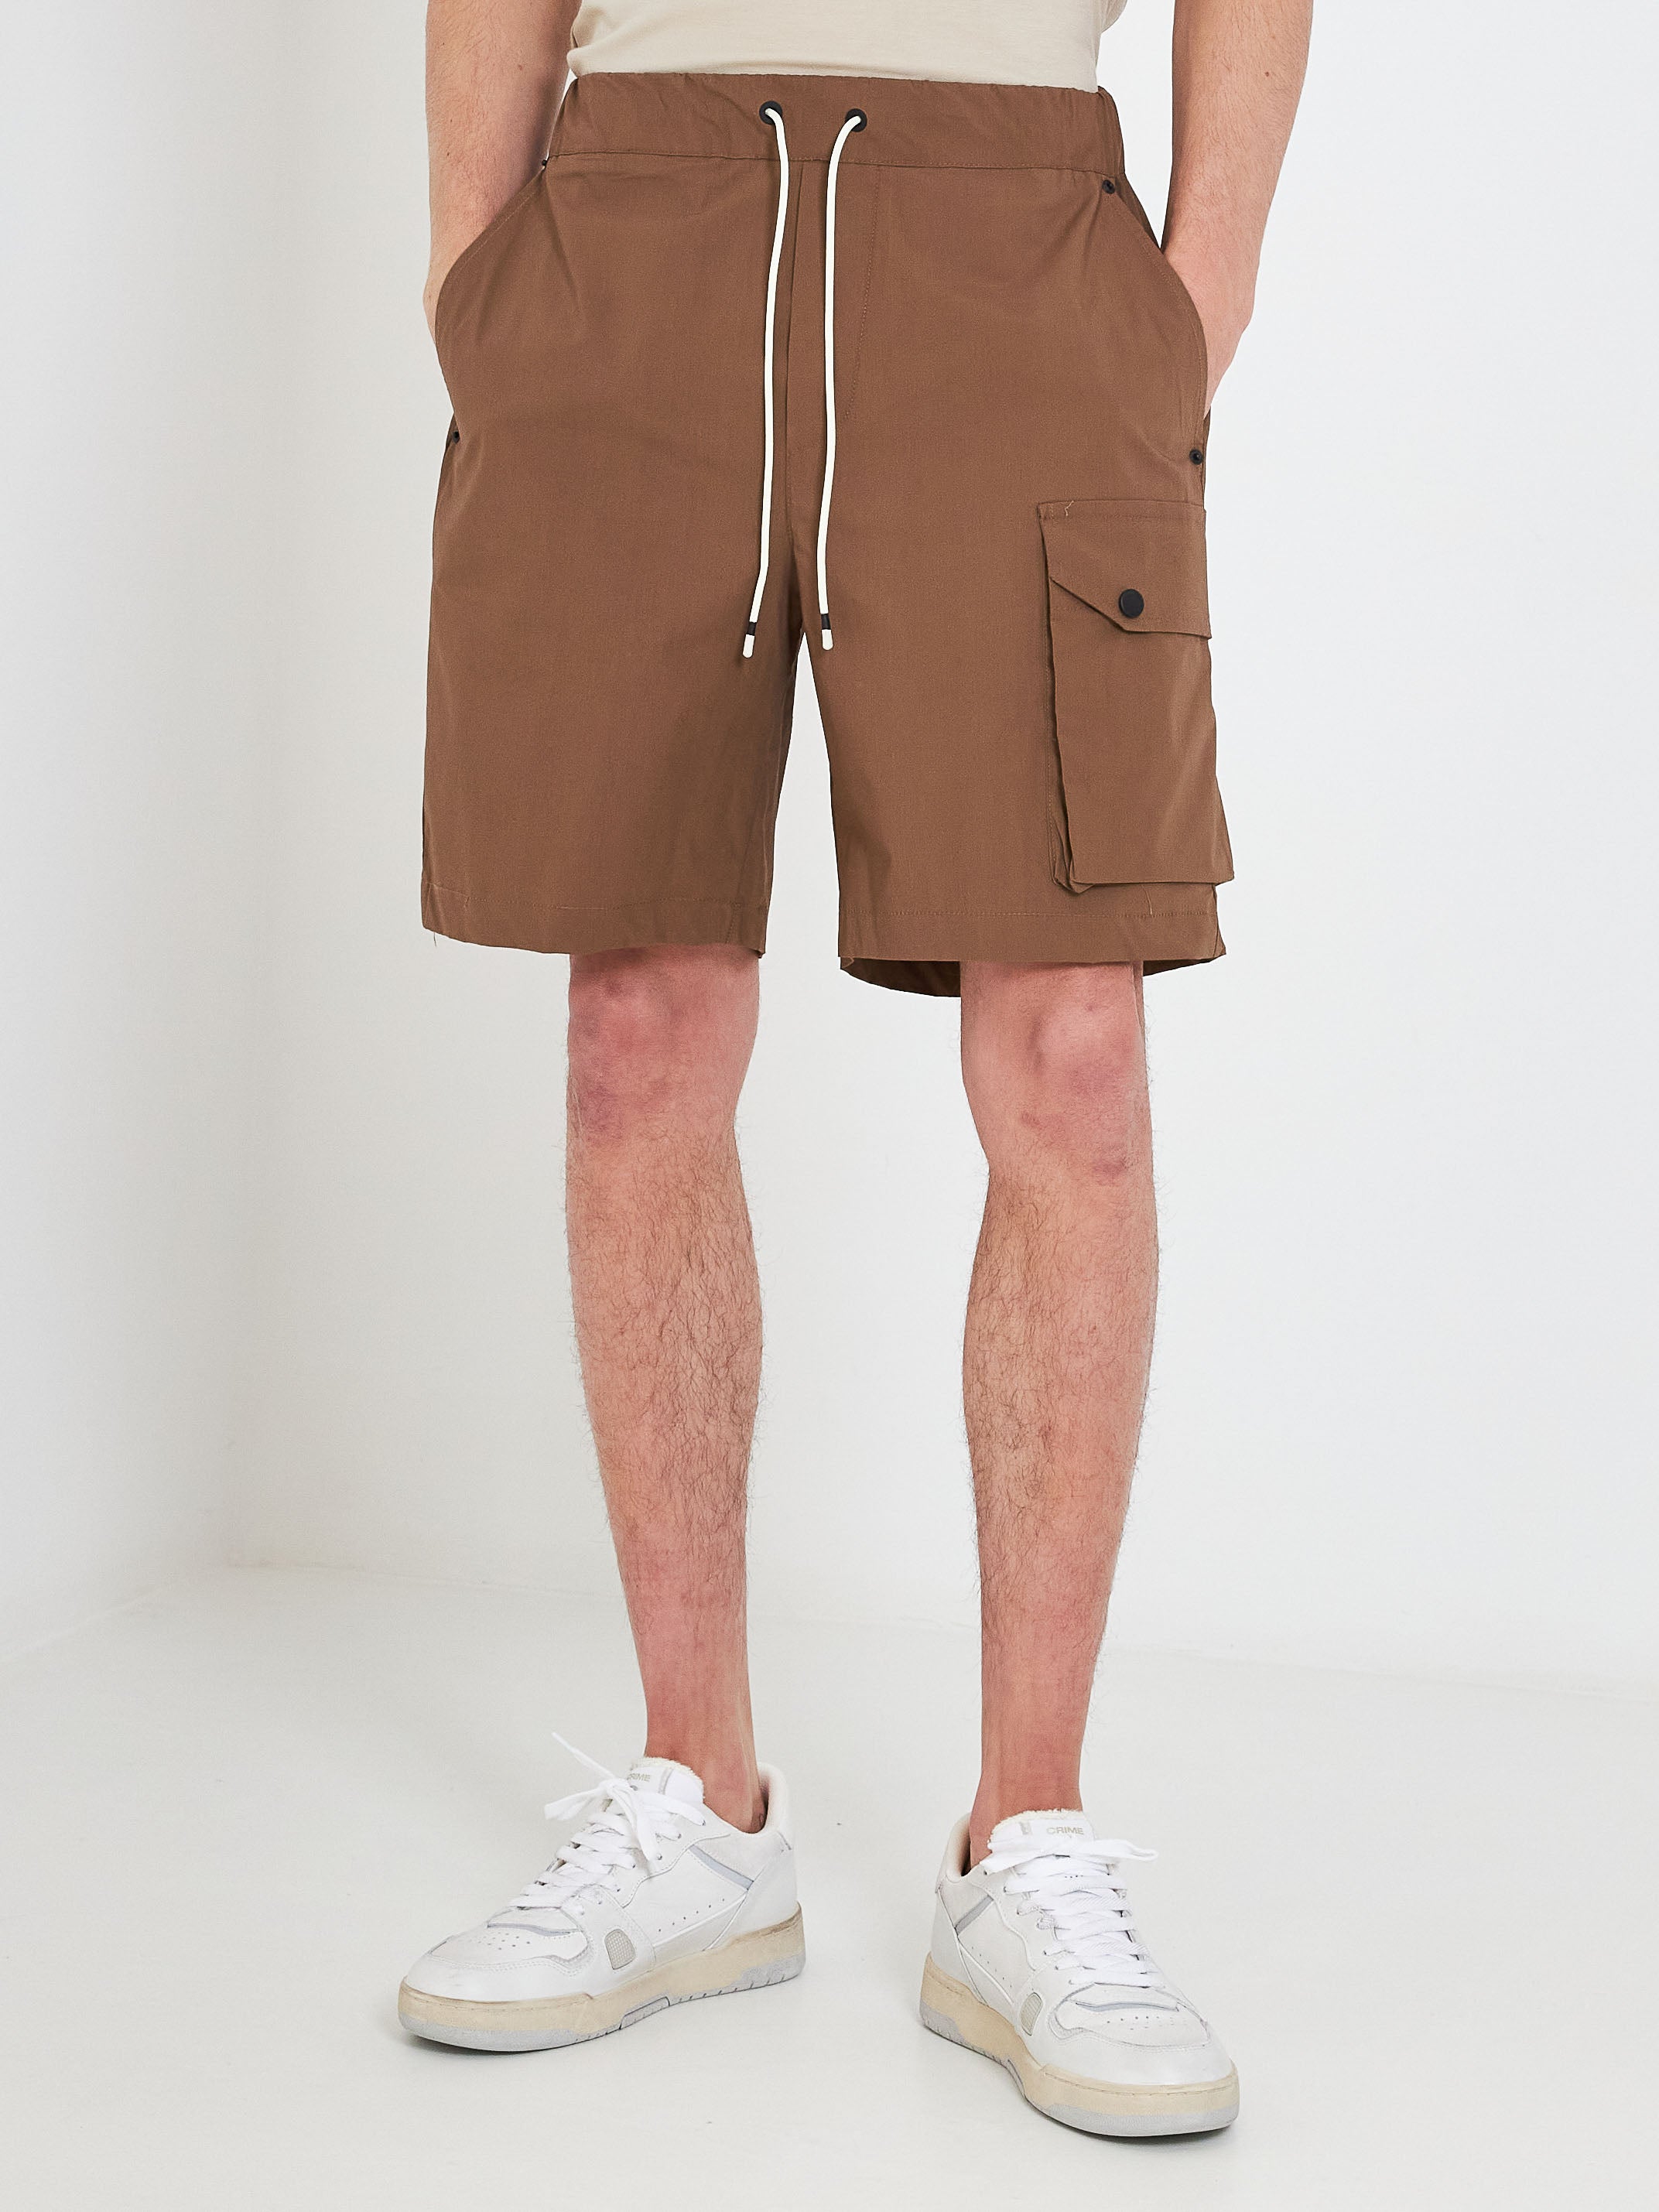 White Over brown Bermuda shorts